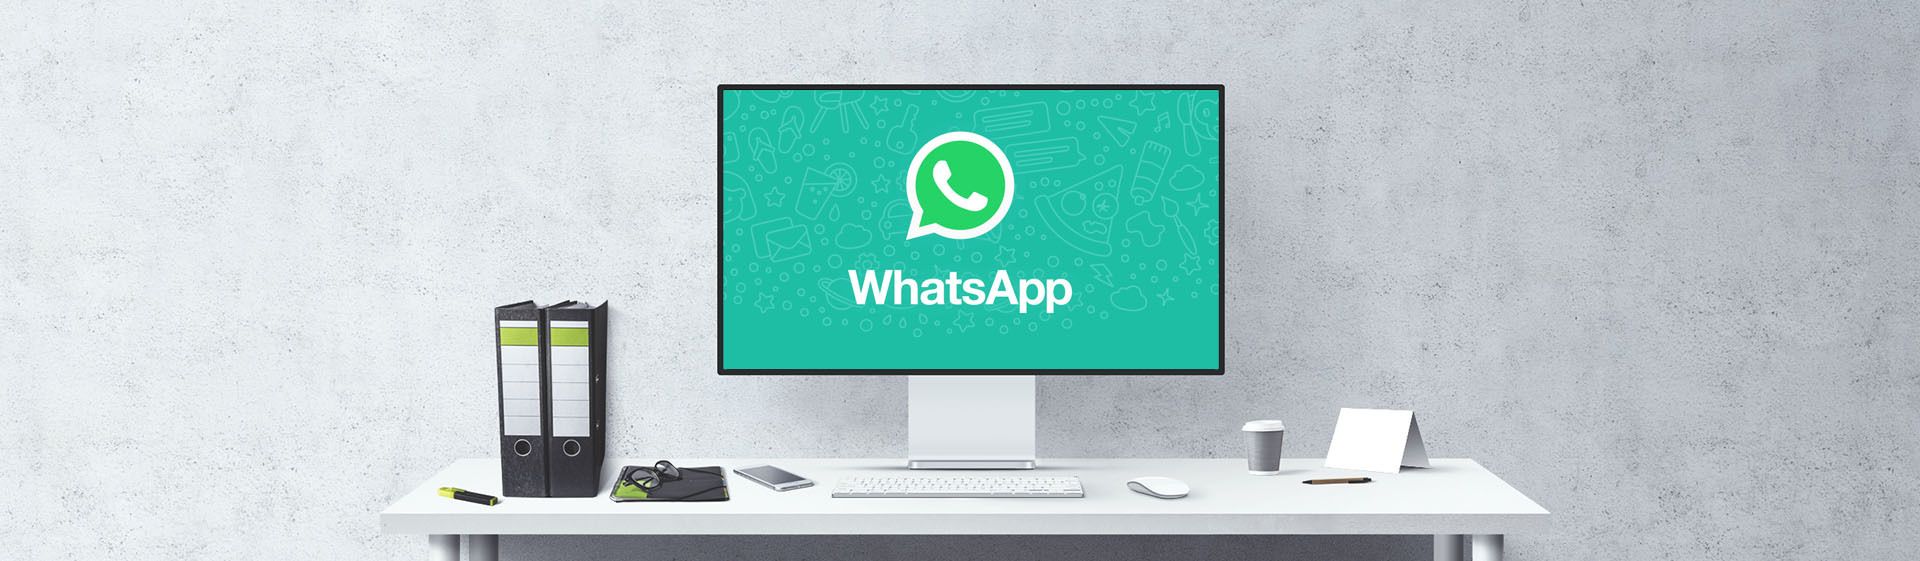 Como usar WhatsApp no PC: confira o guia completo